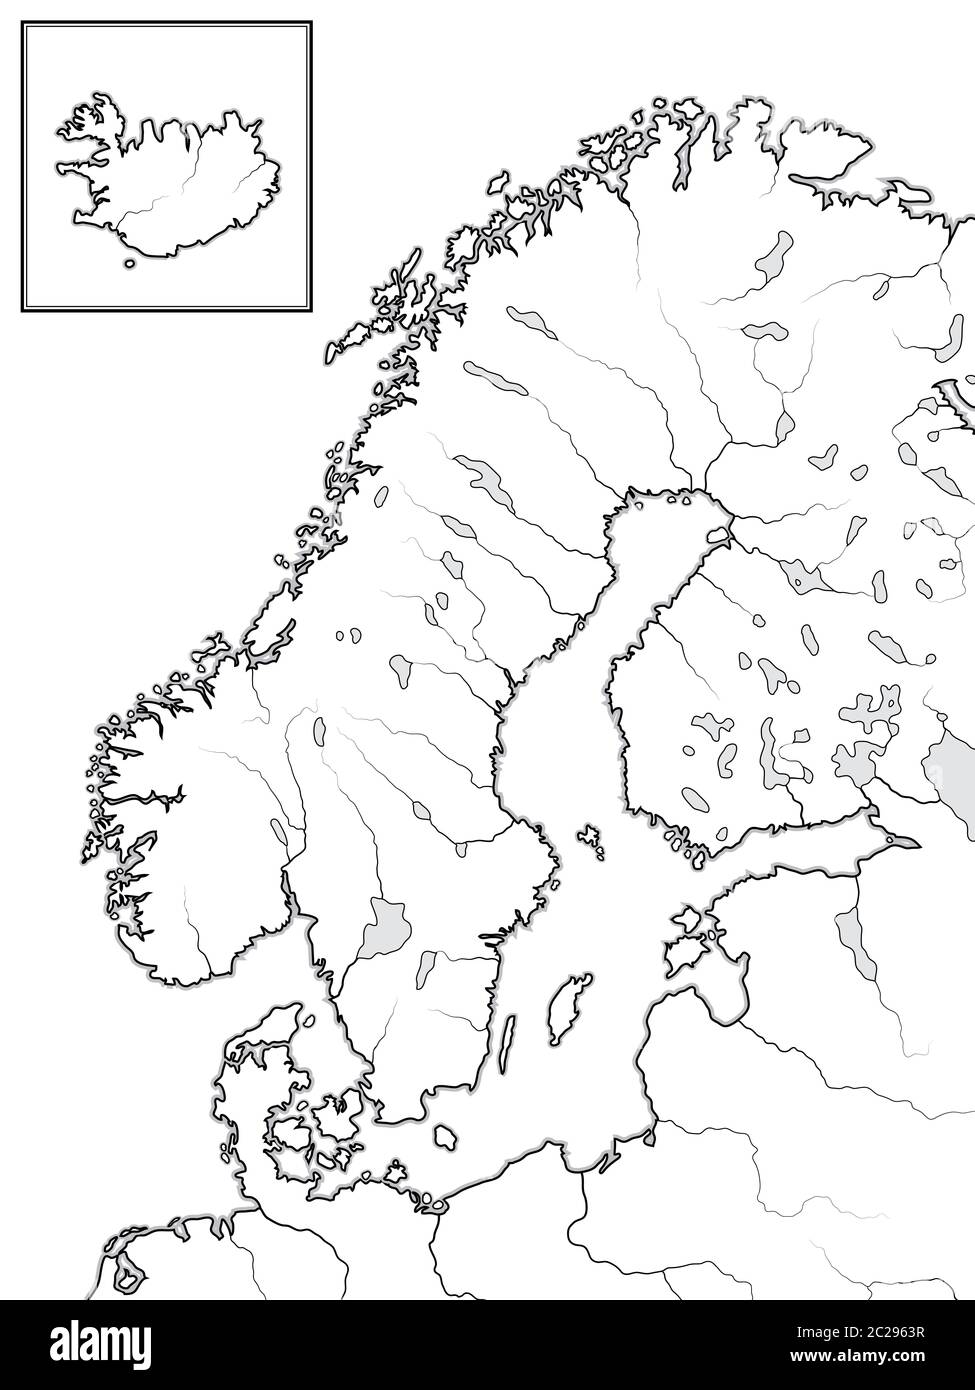 Map of The SCANDINAVIAN Lands: Scandinavia, Sweden, Norway, Finland, Denmark & Iceland. Geographic chart. Stock Photo